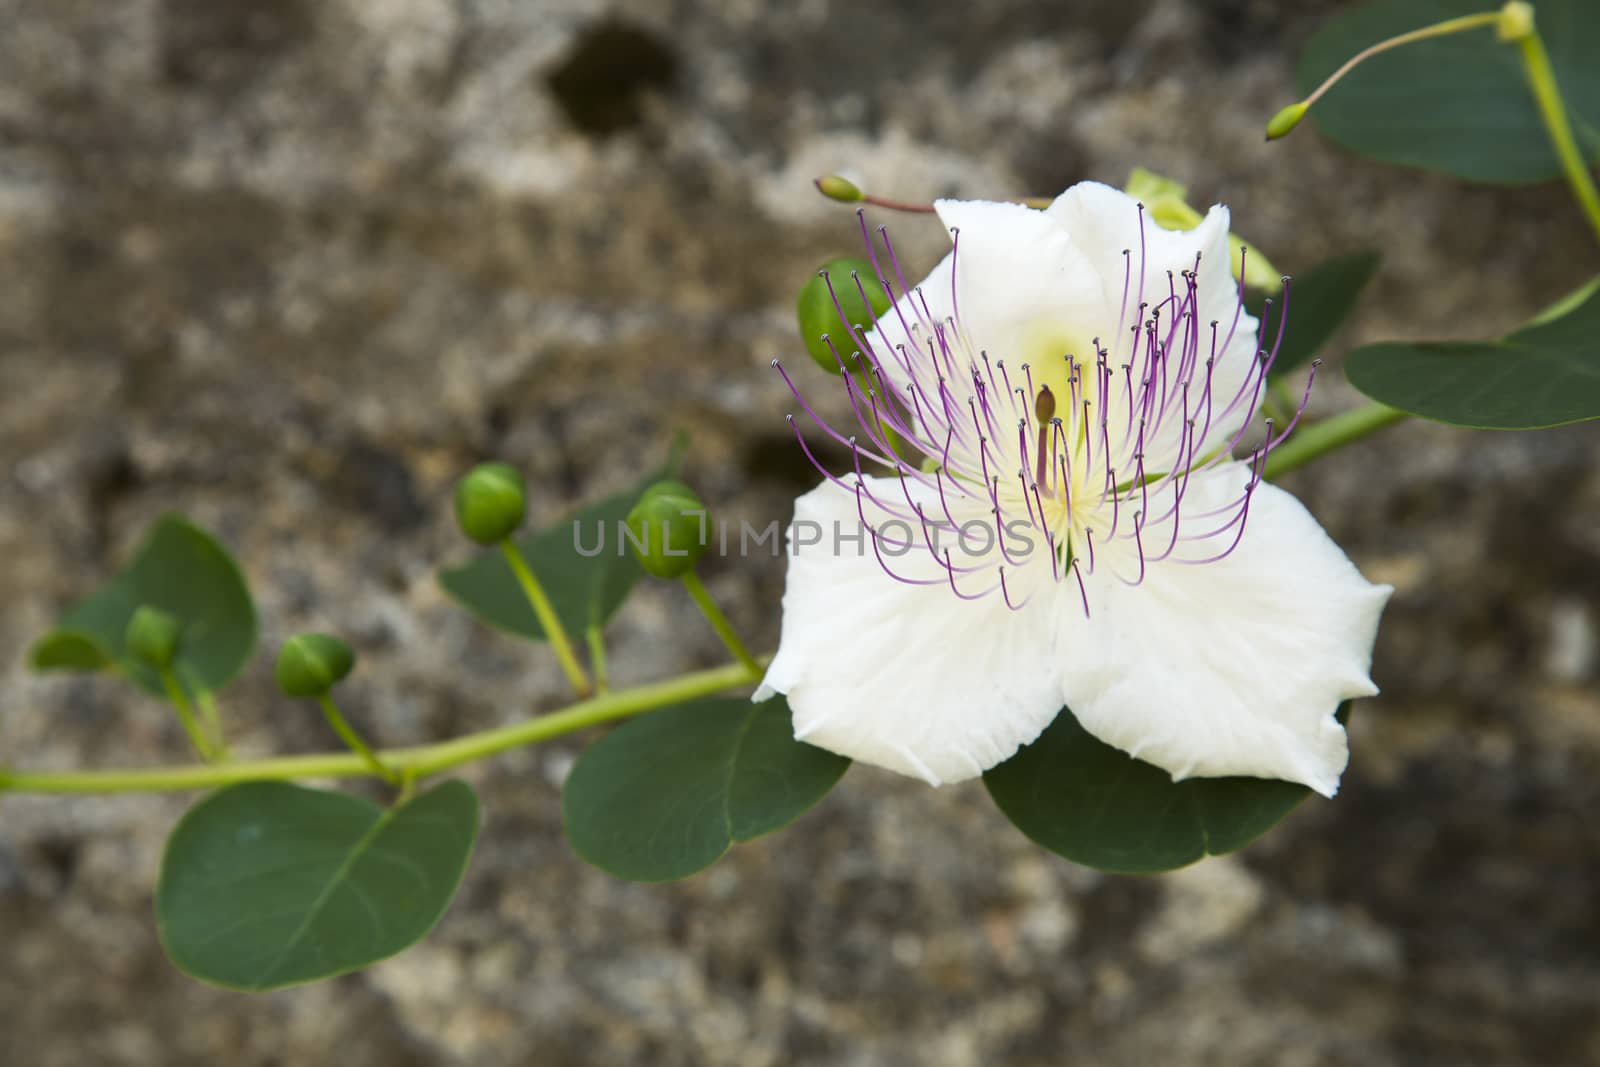 Caper flower by nicobernieri